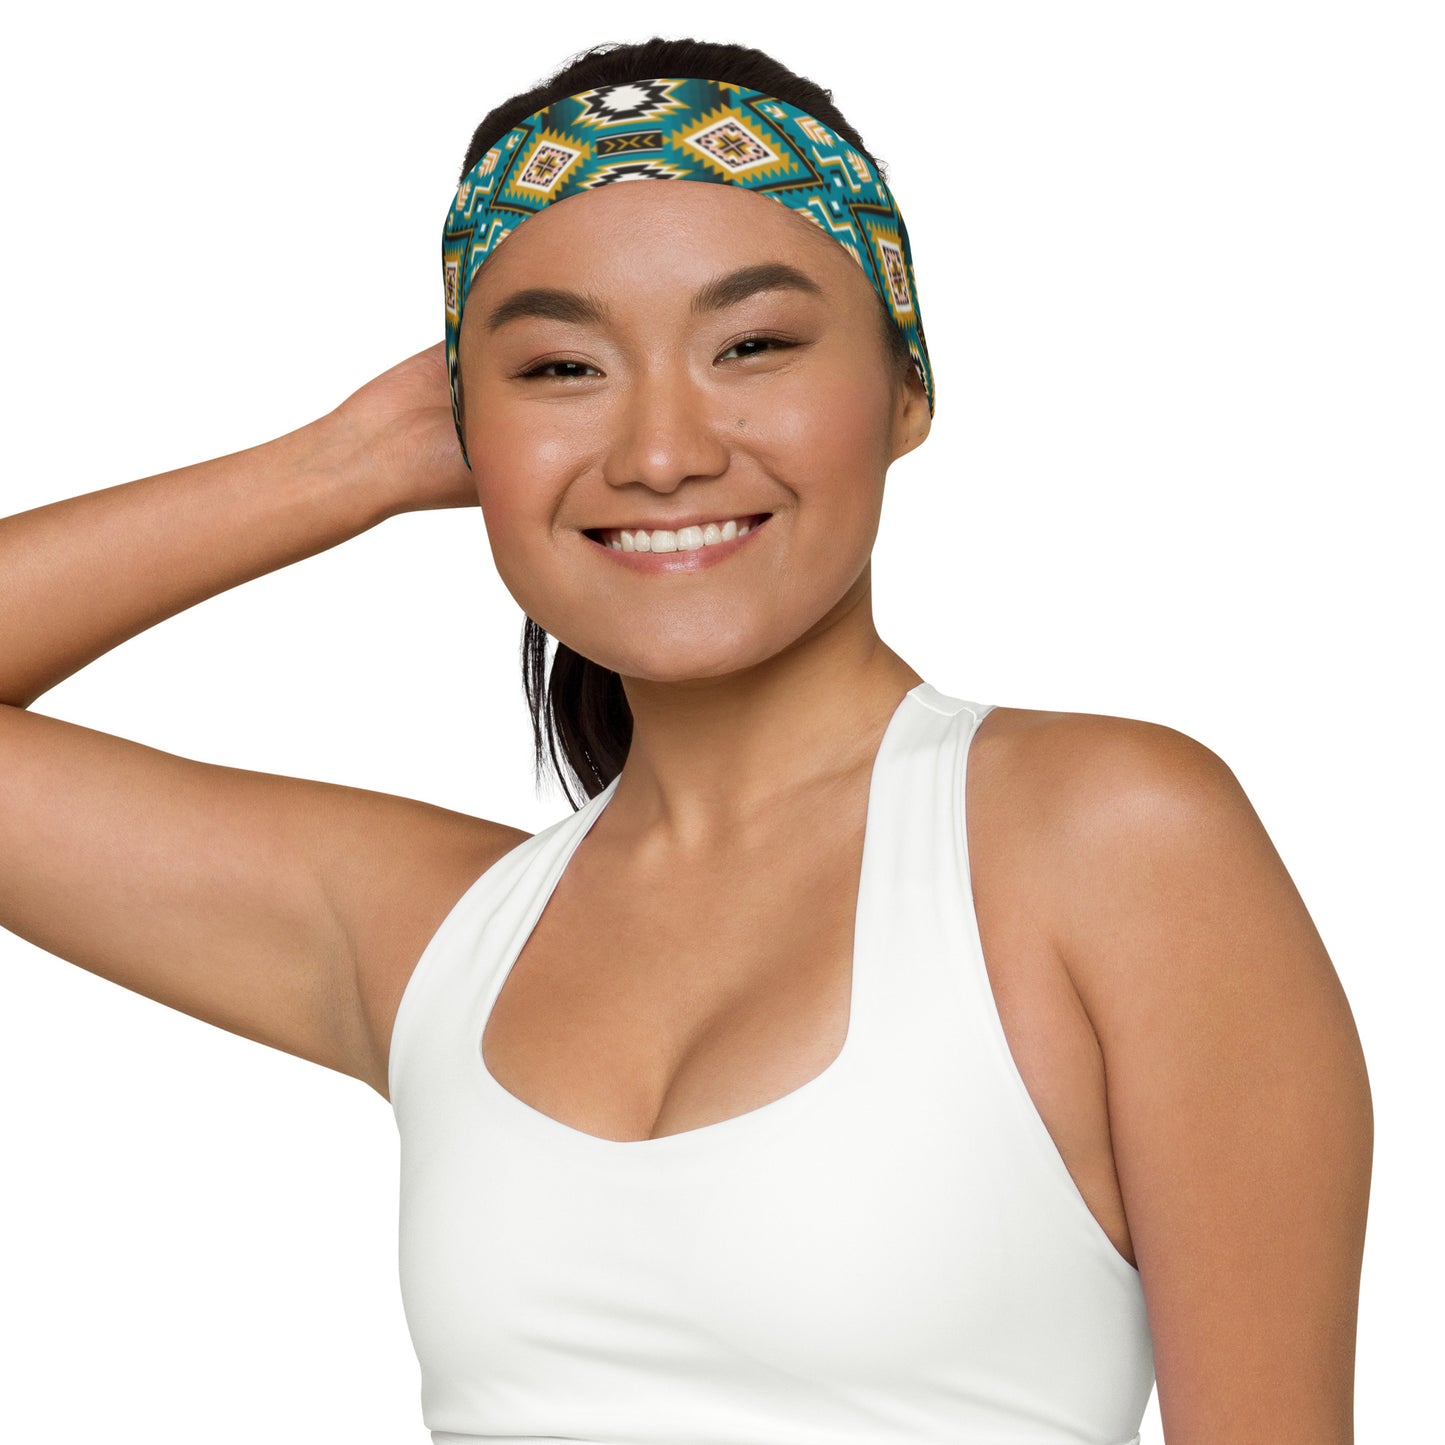 Western native American Indian Aztec geometric pattern Headband